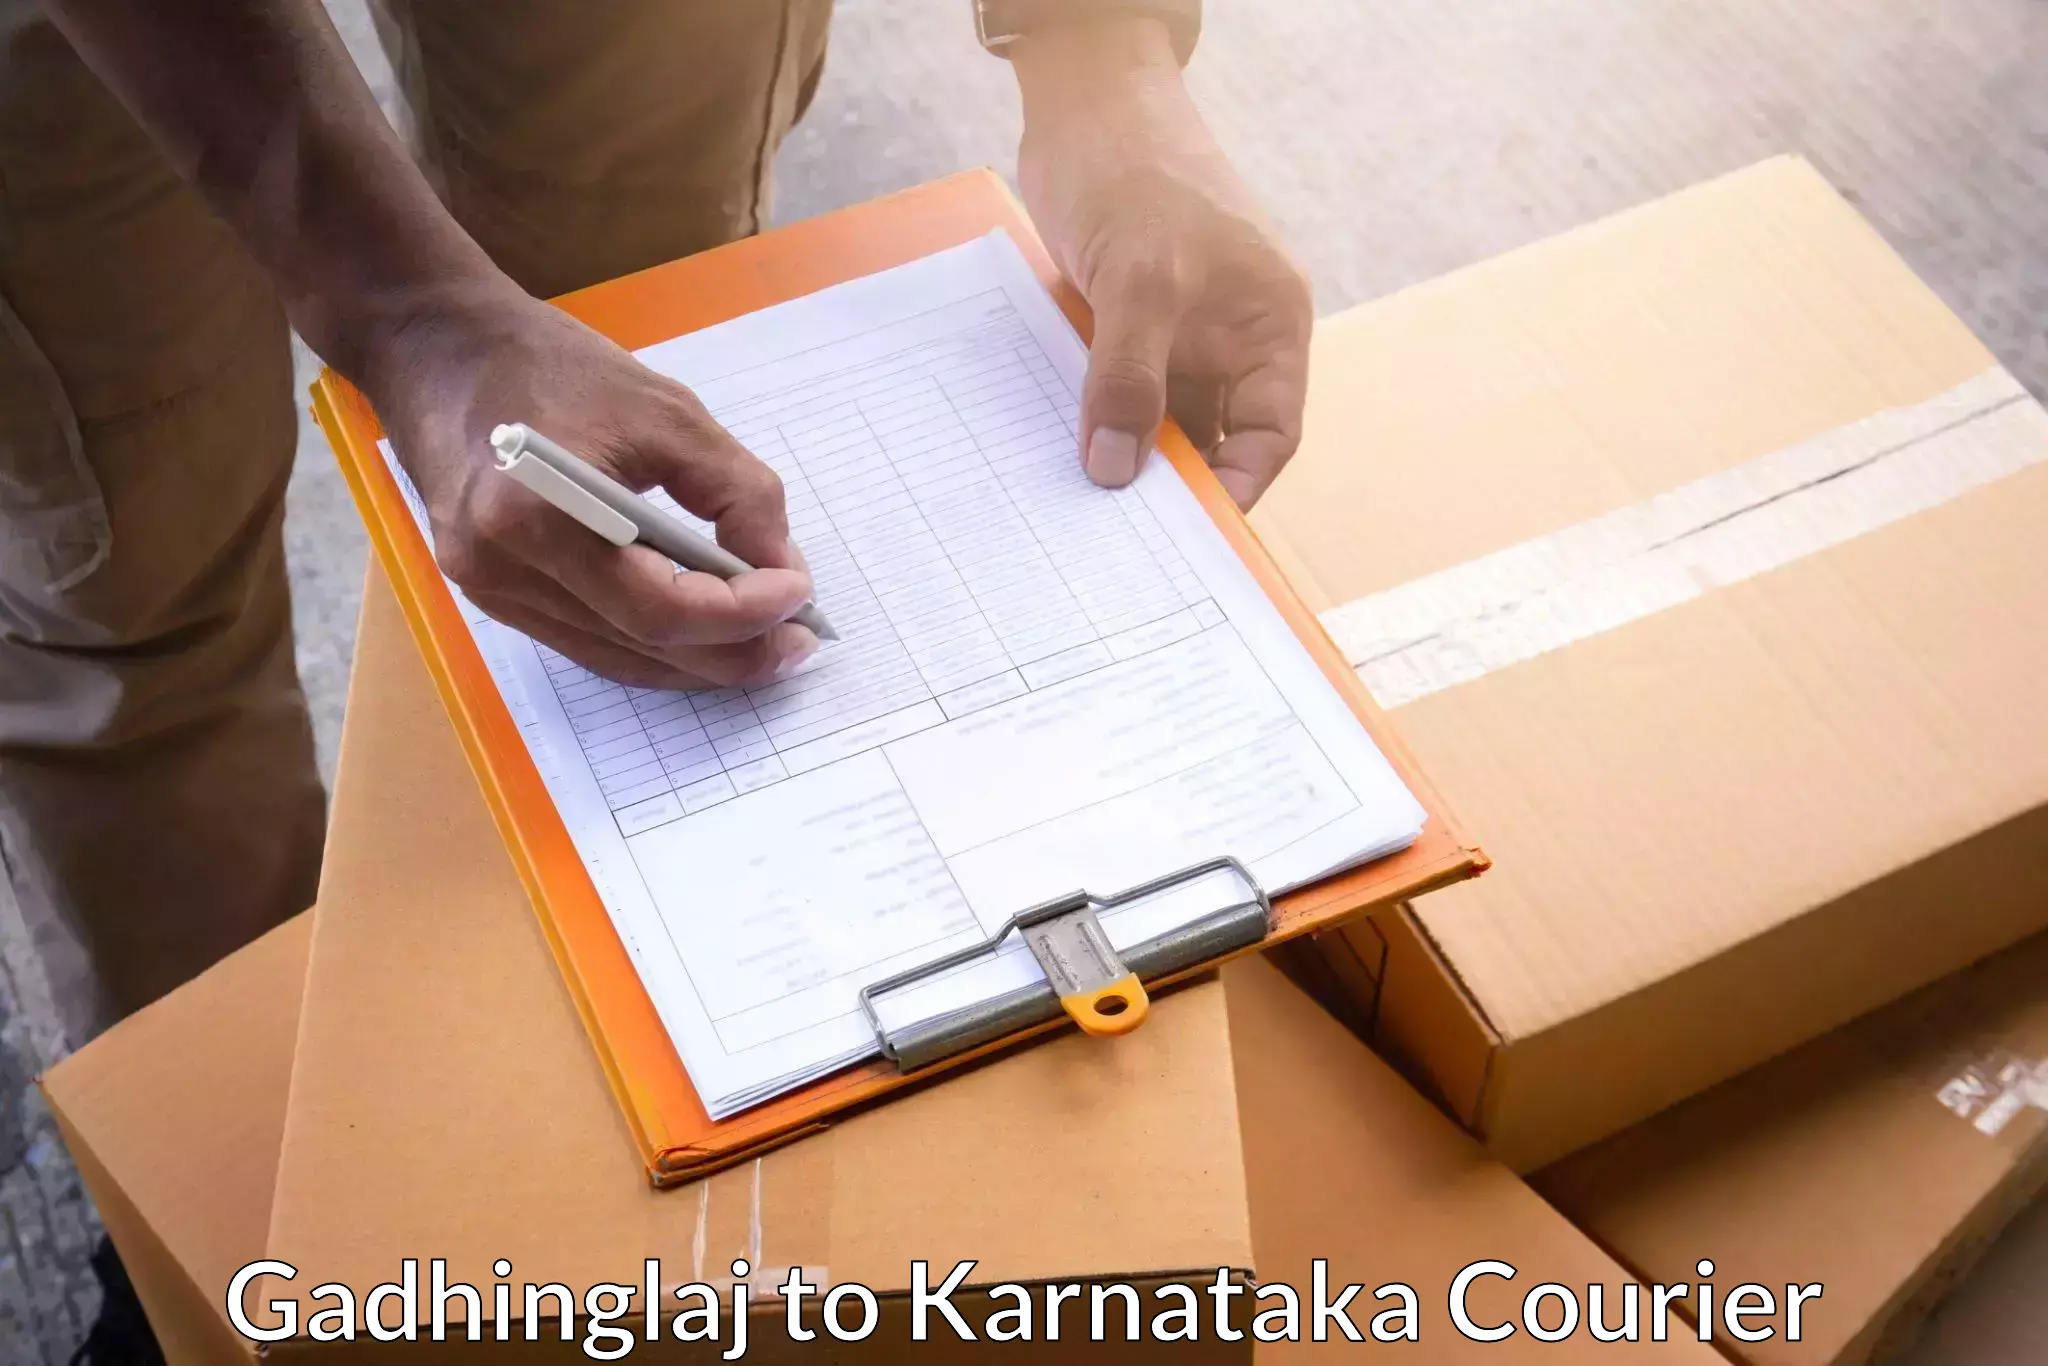 International parcel service Gadhinglaj to Karnataka